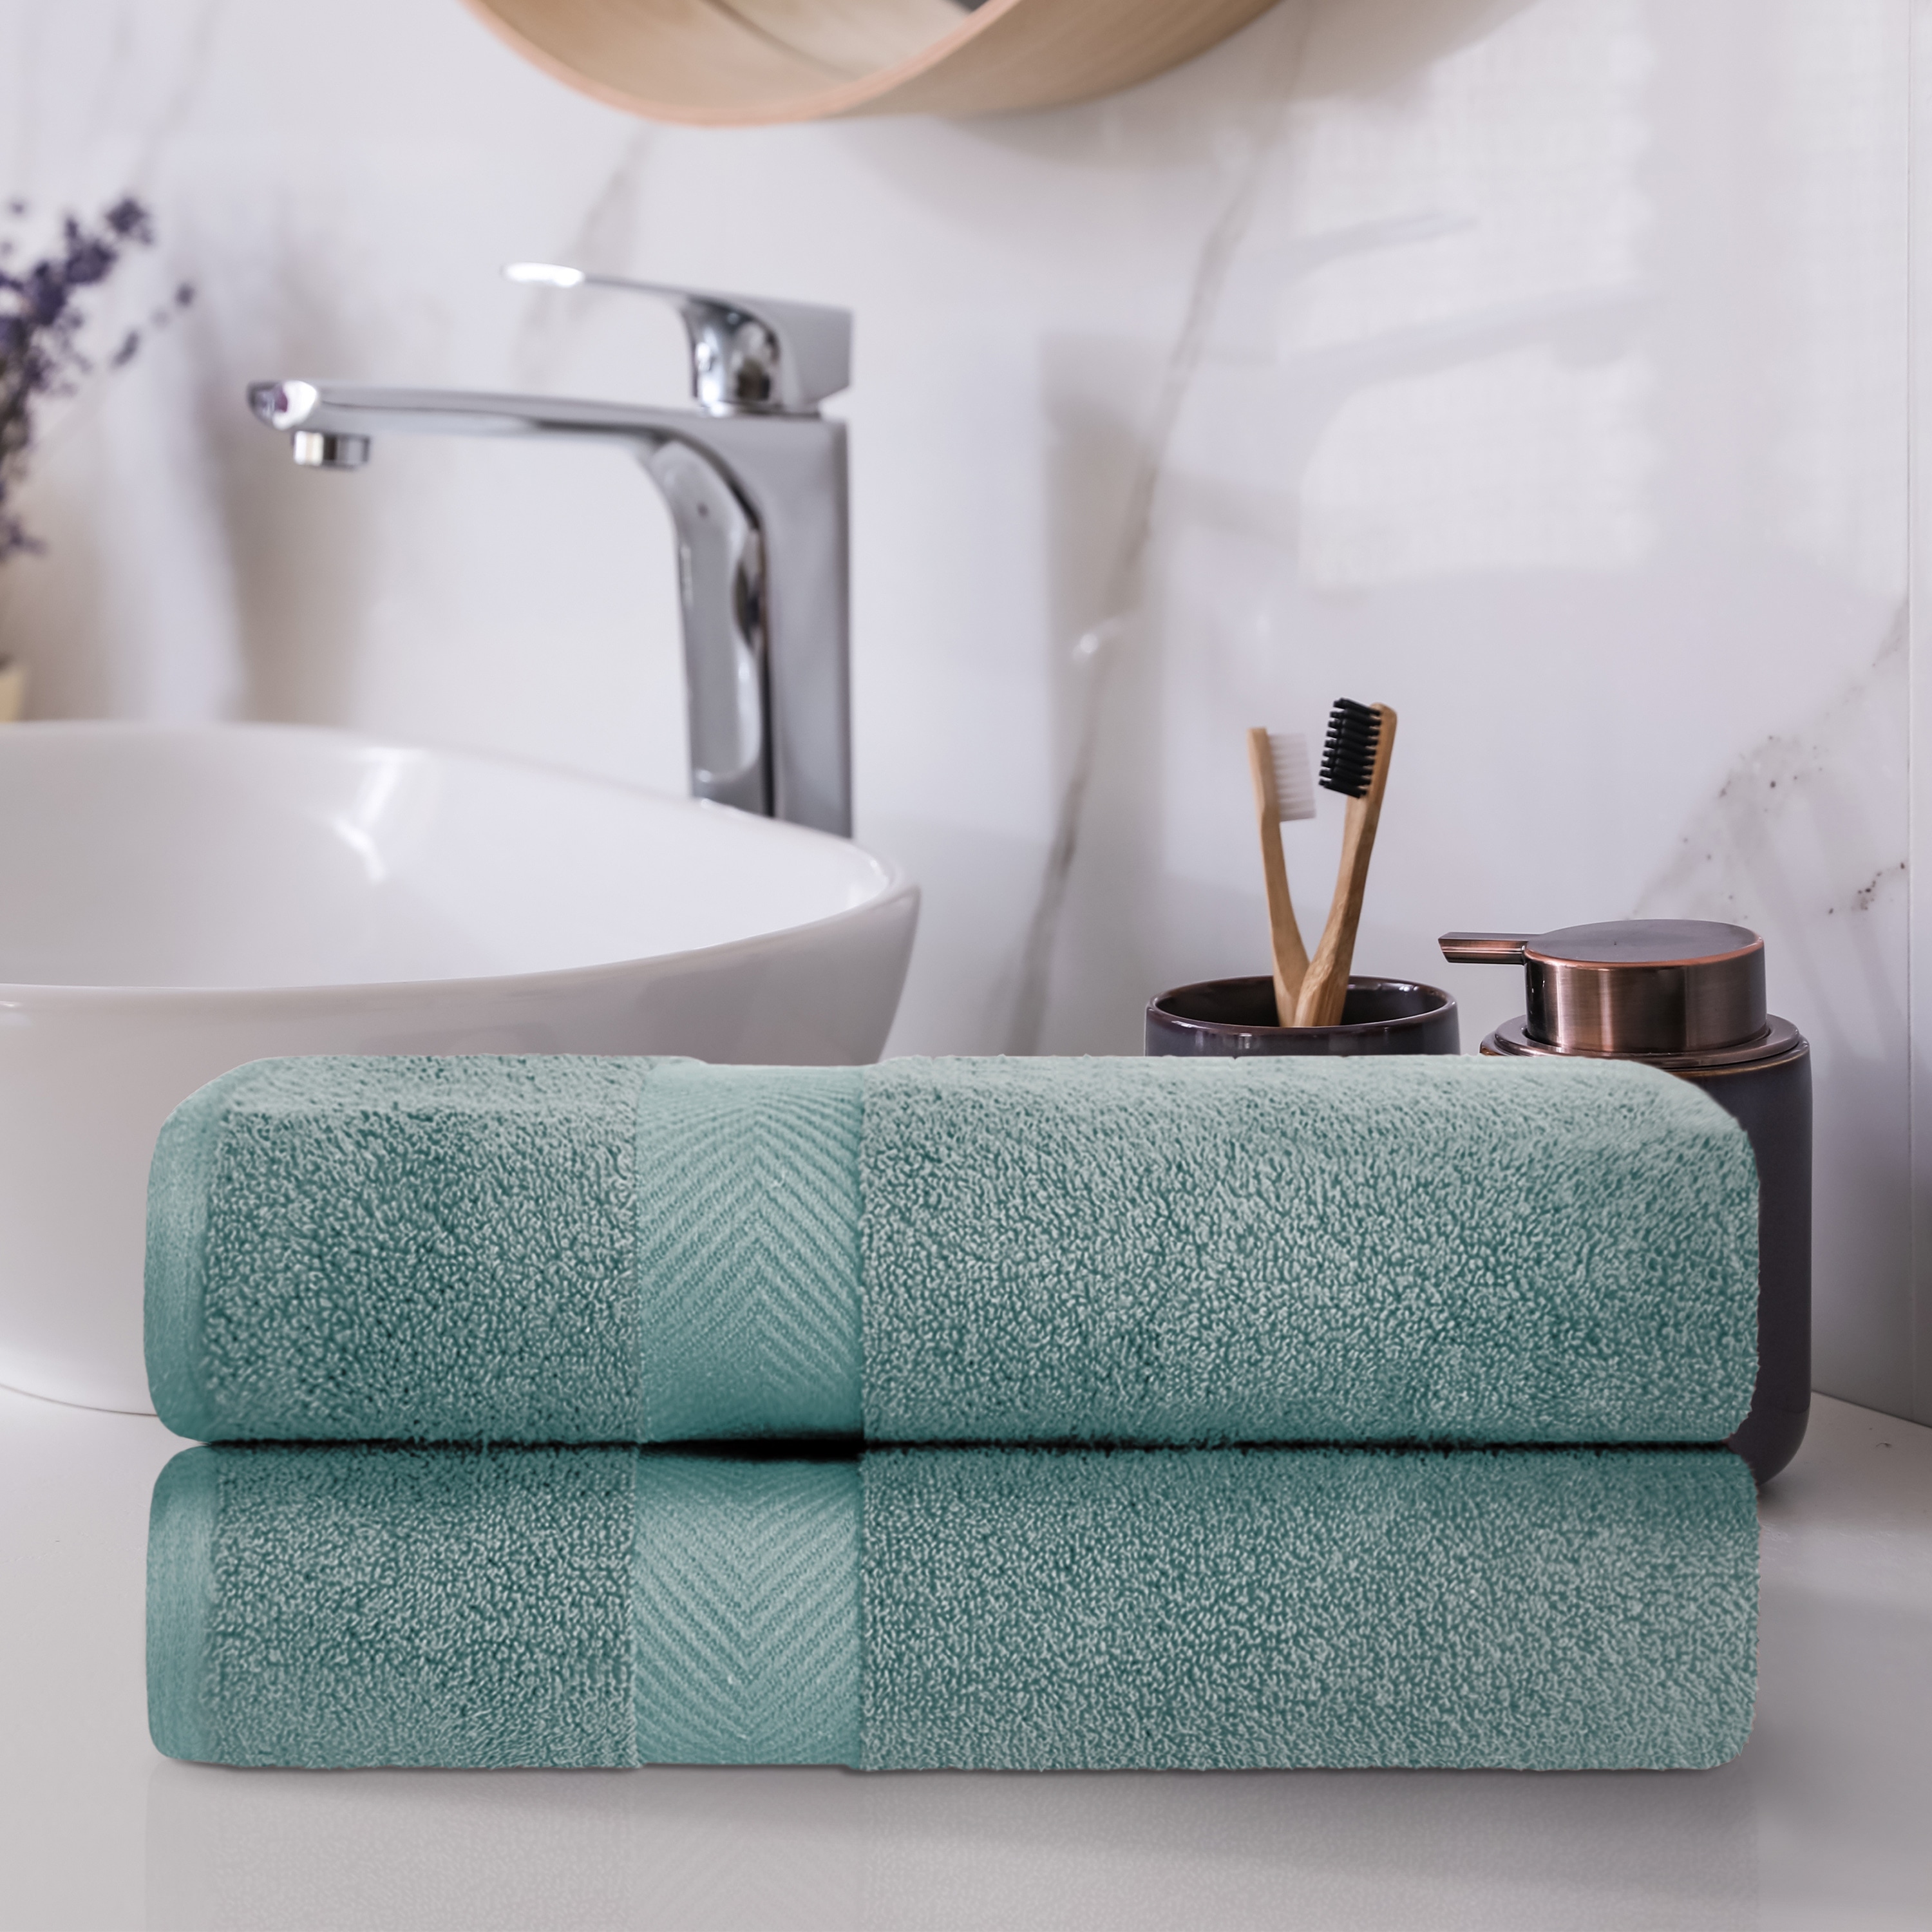 https://ak1.ostkcdn.com/images/products/is/images/direct/17c8e6316460c9dca595c57b49573815fe62bdf4/Miranda-Haus-Absorbent-Zero-Twist-Cotton-Bath-Towel-%28Set-of-2%29.jpg